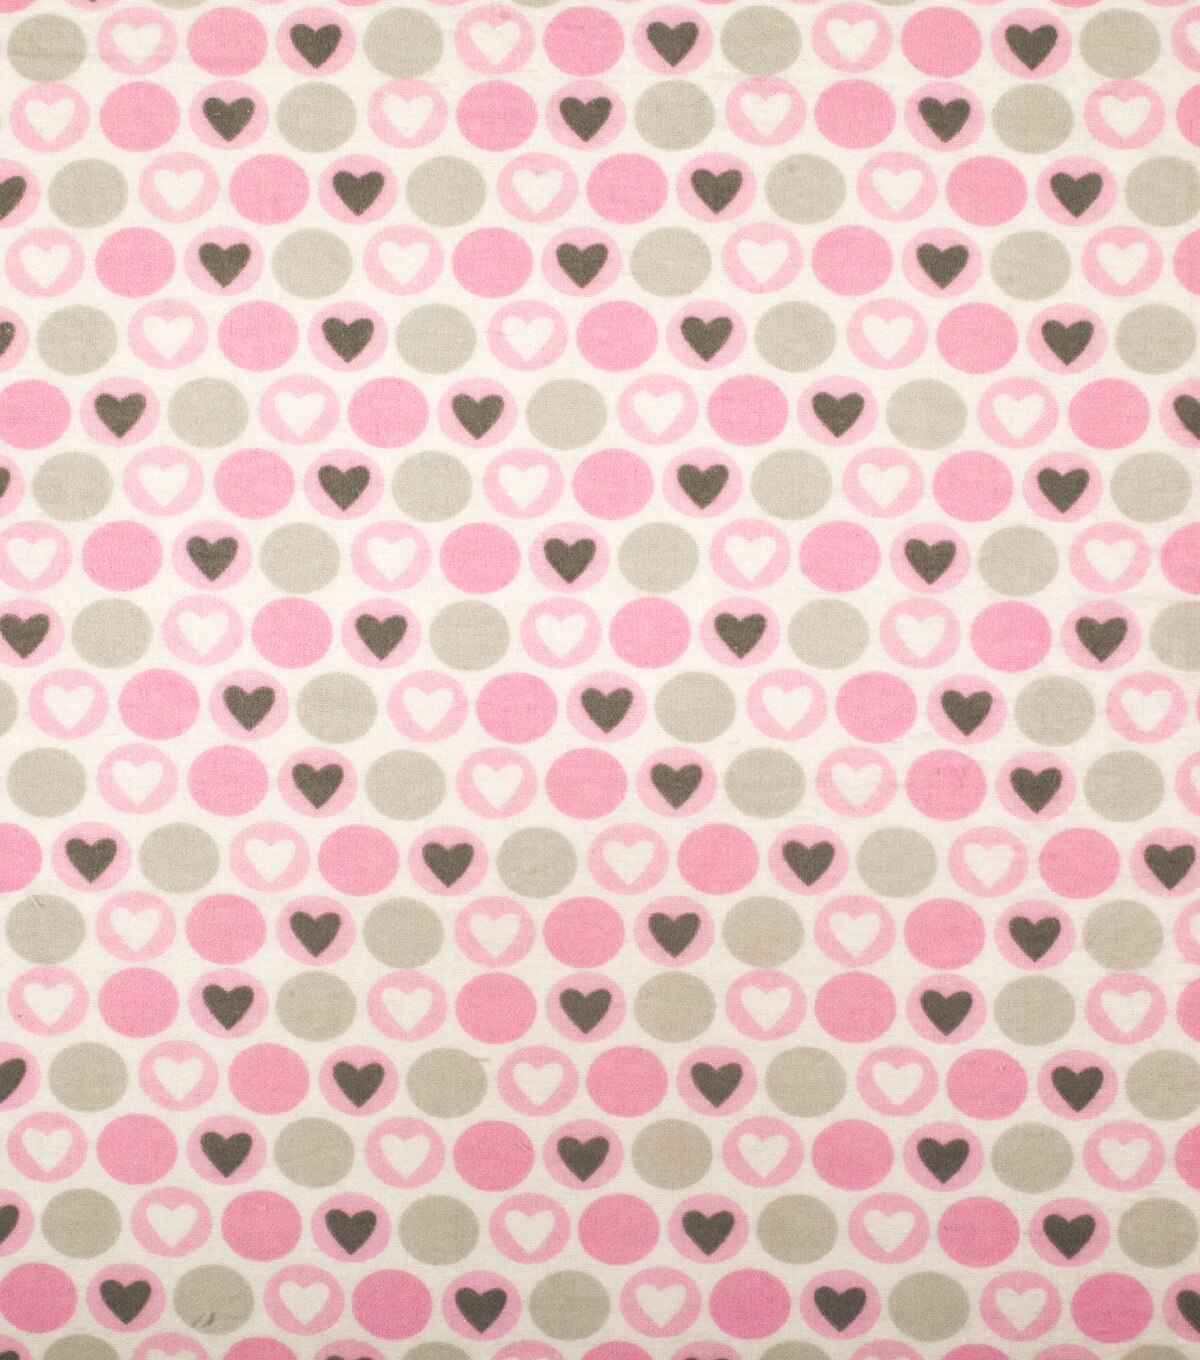 Hearts & Dots Pink & Gray Super Snuggle Flannel Fabric | JOANN